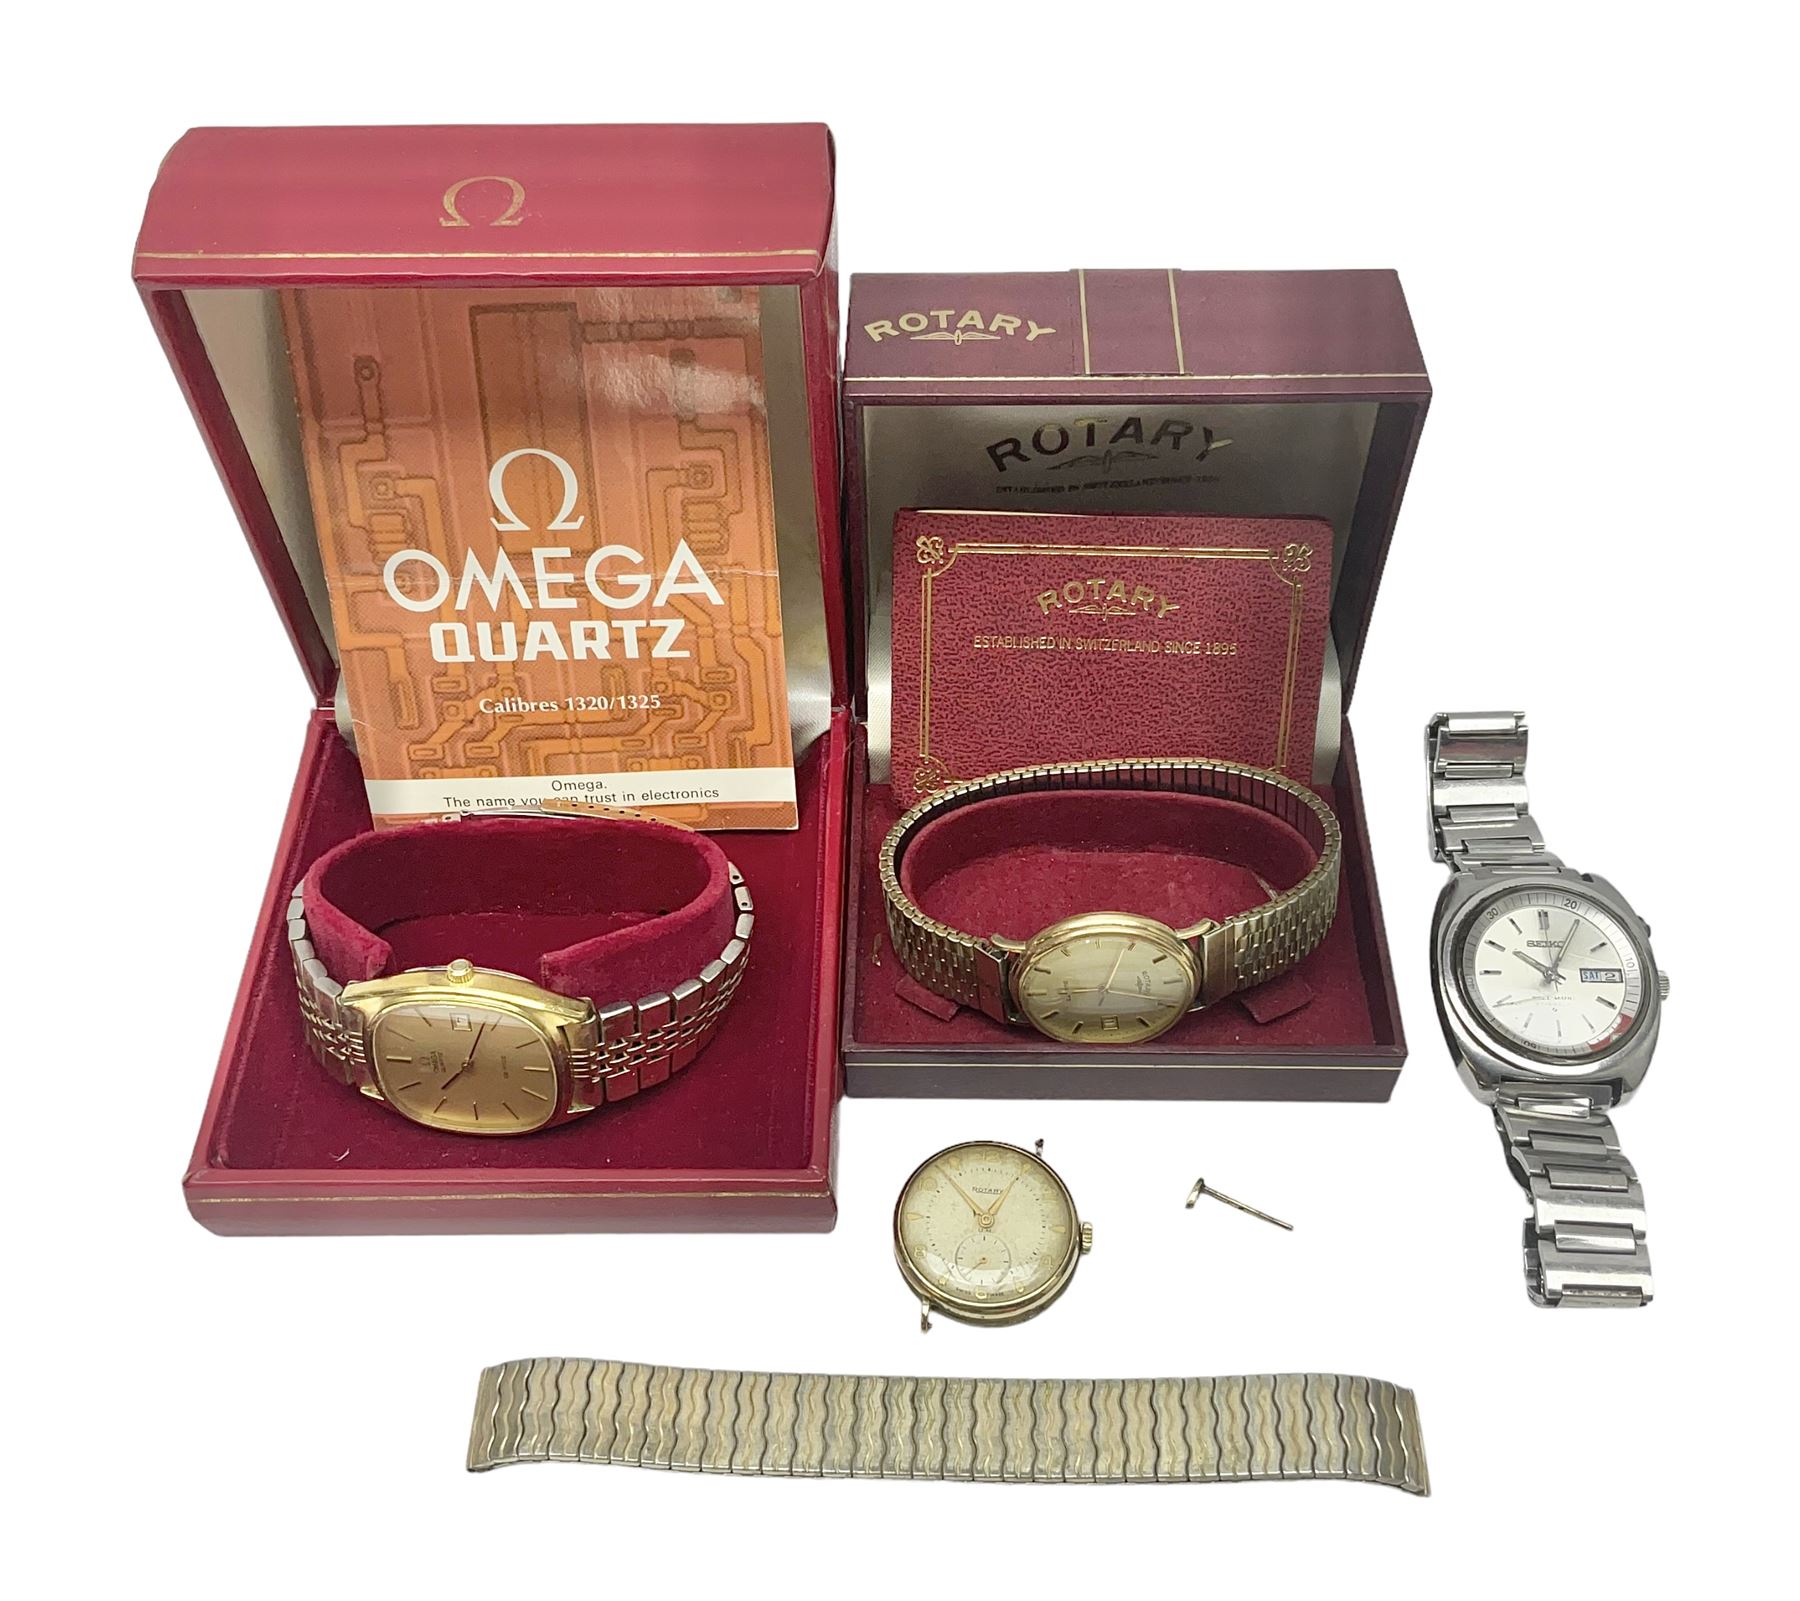 Rotary gentleman's 9ct gold manual wind wristwatch